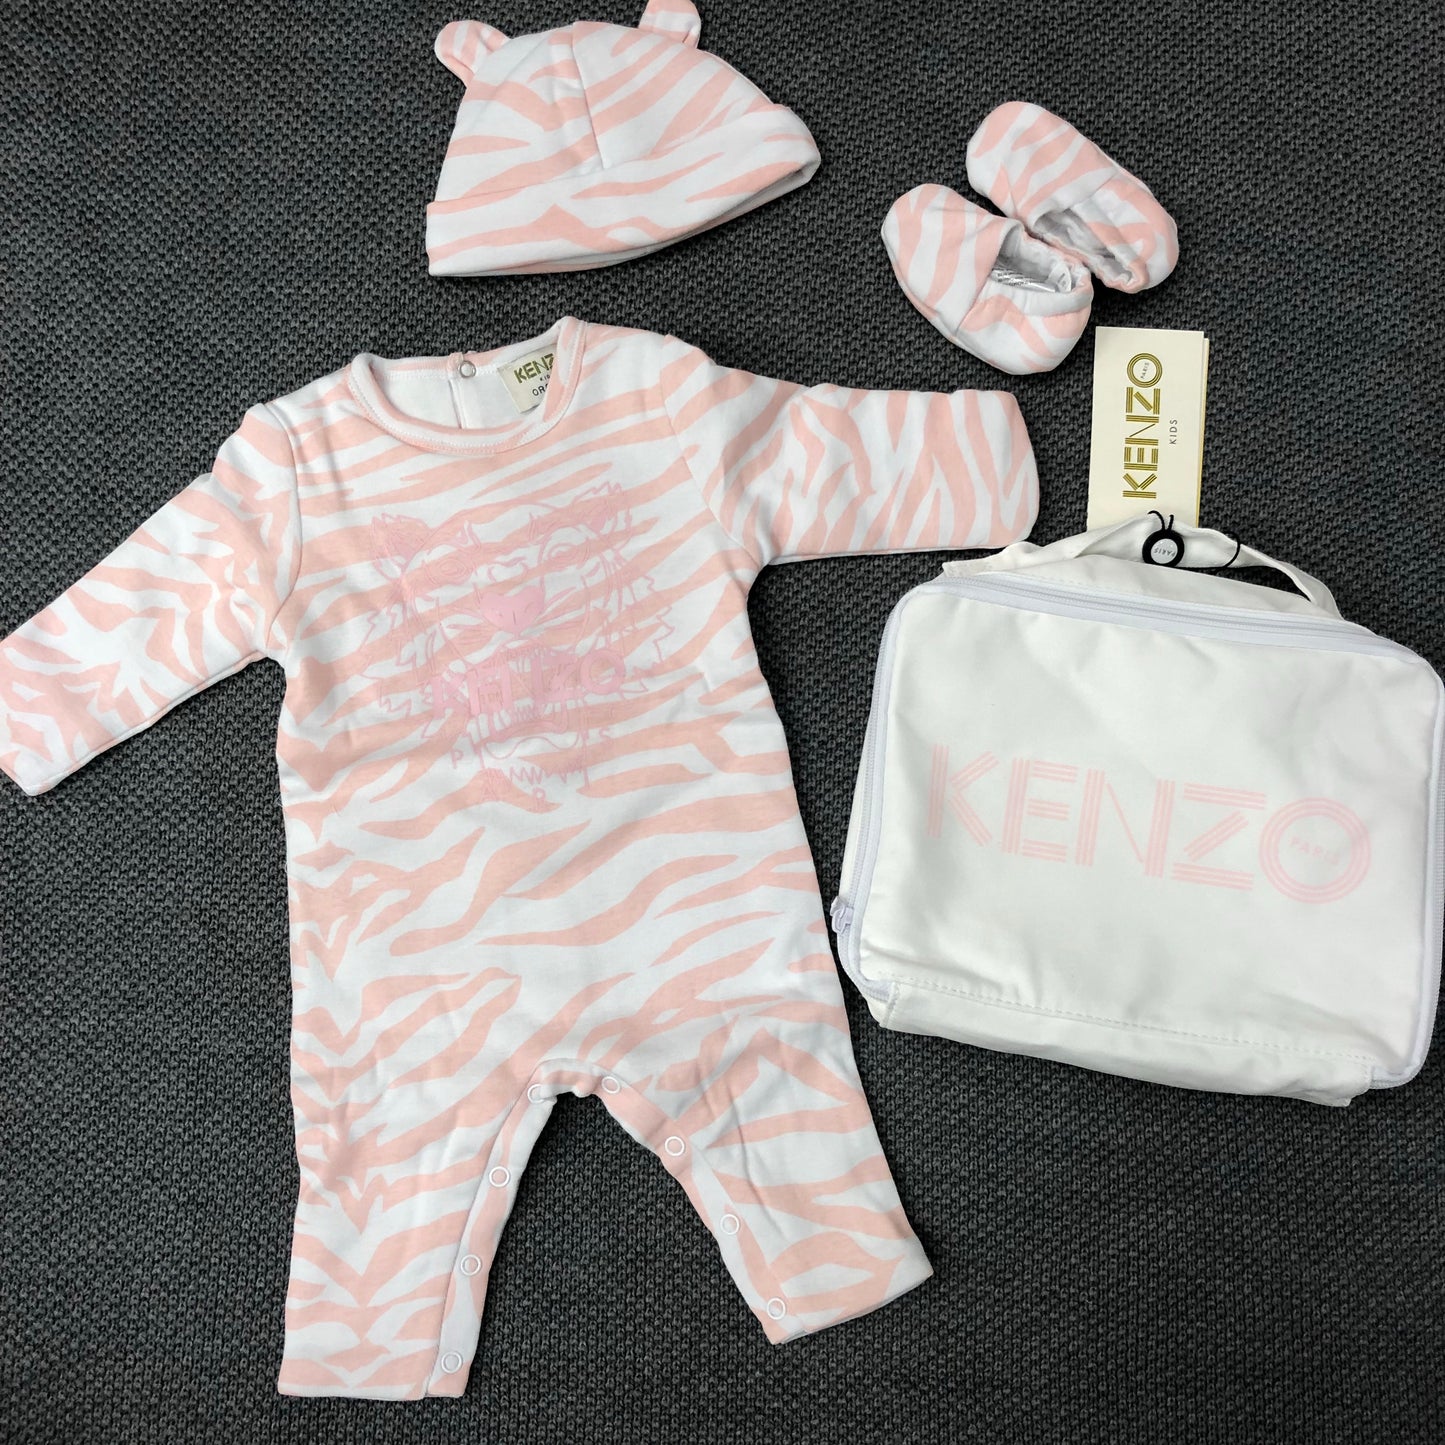 Kenzo Kids doreale set baby jumpsuit sweet pink